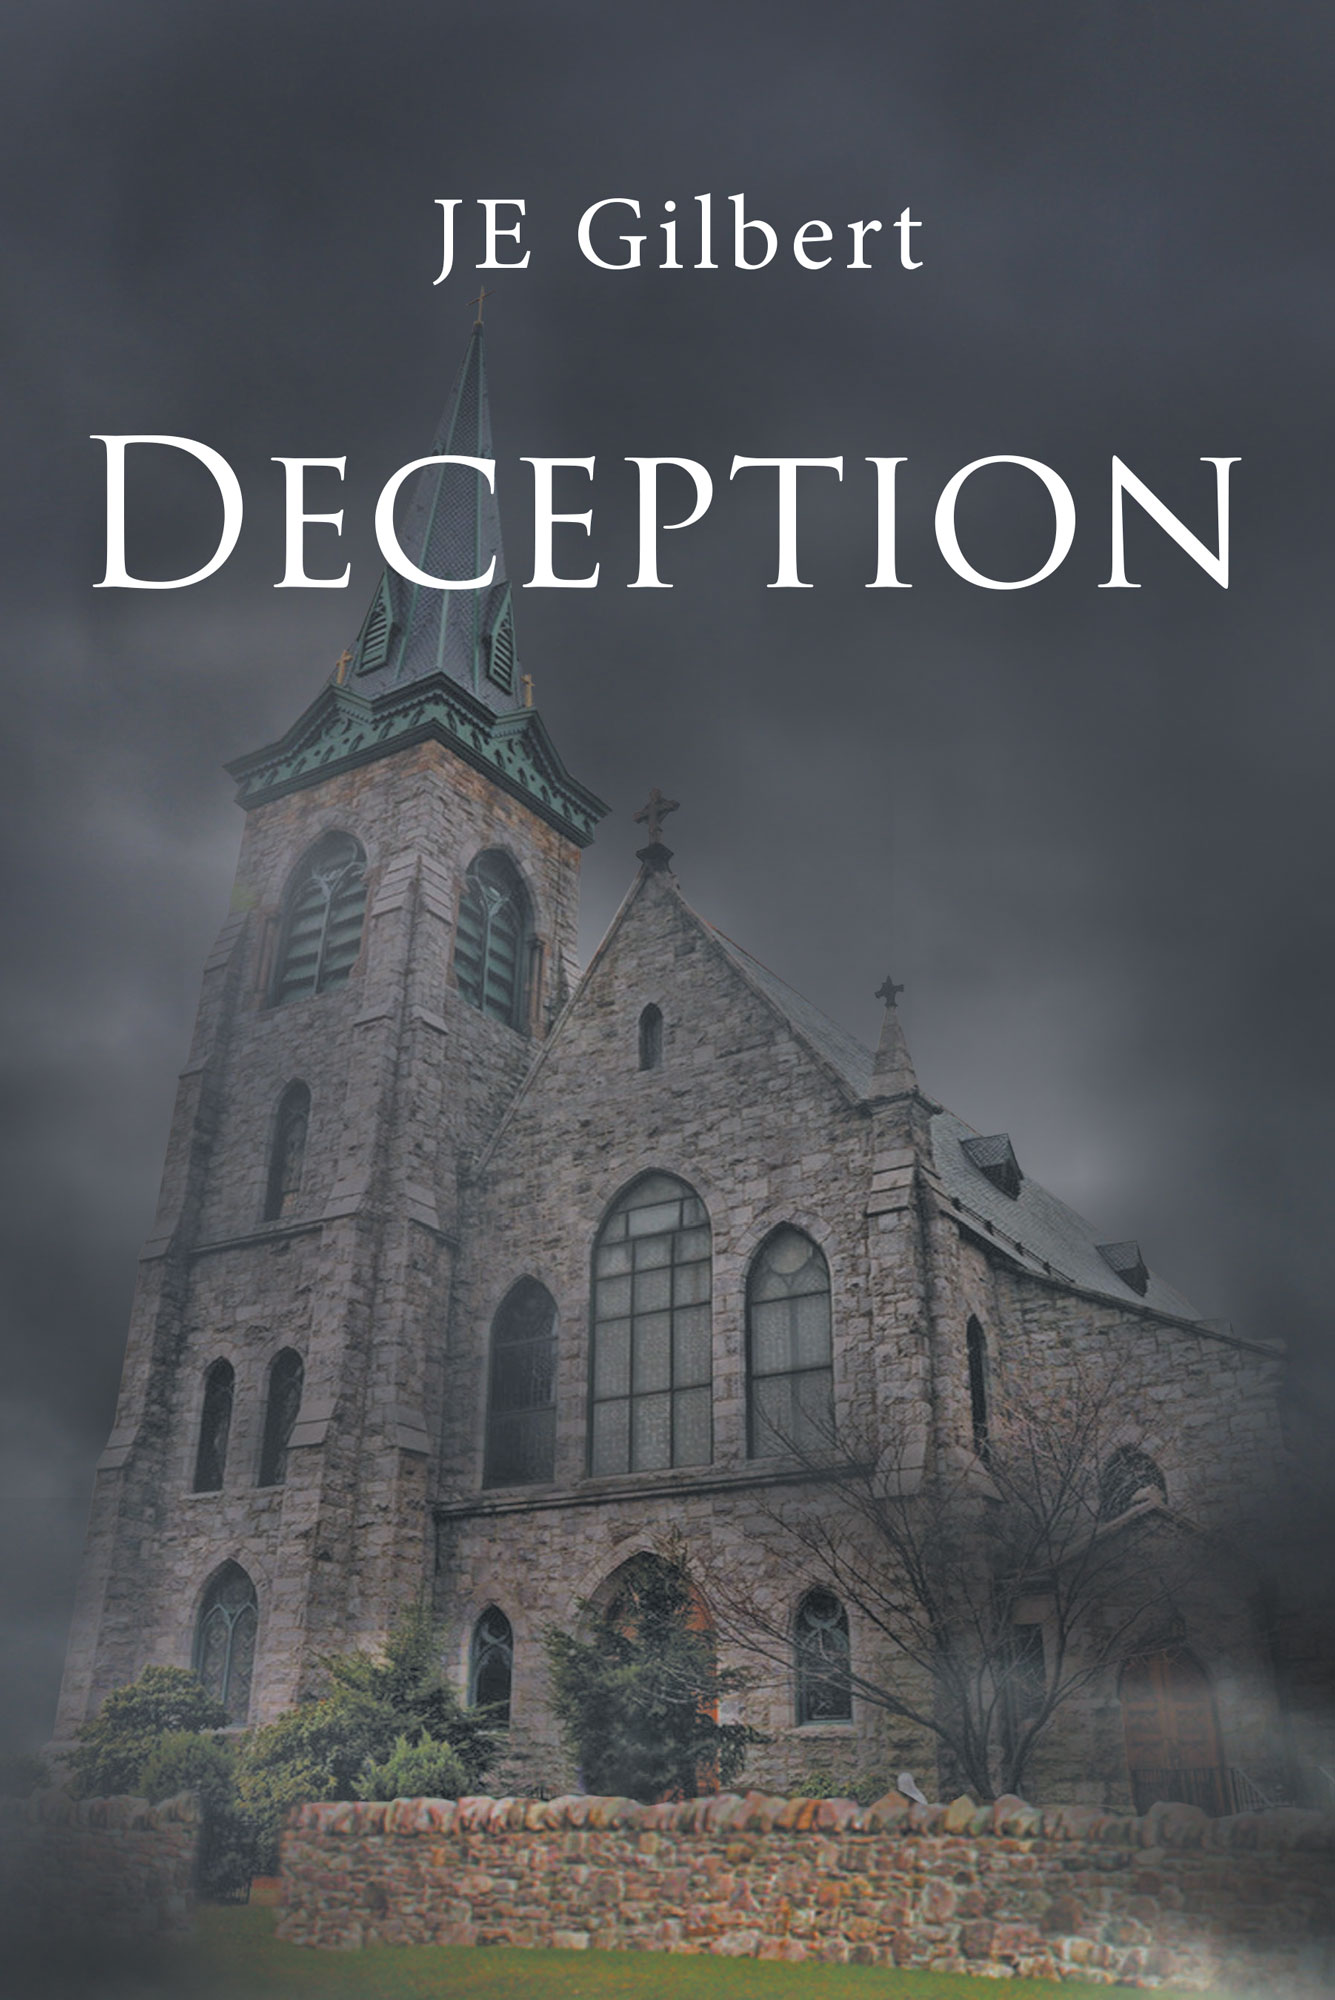 Deception Cover Image